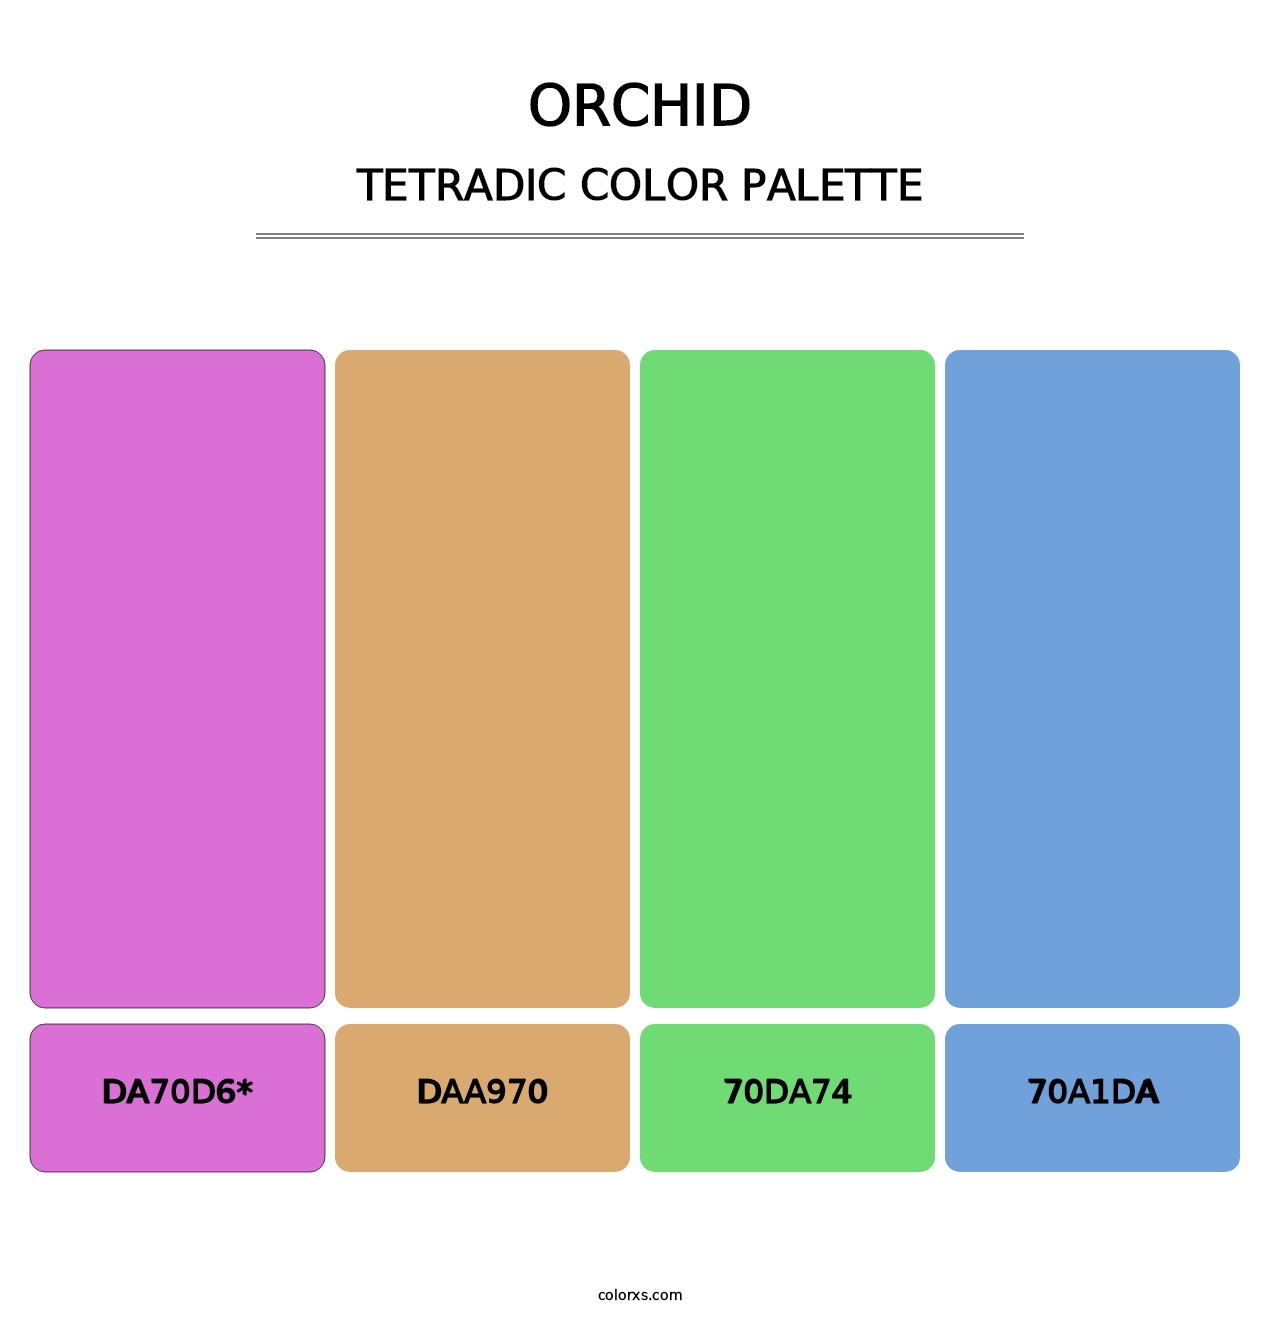 Orchid - Tetradic Color Palette